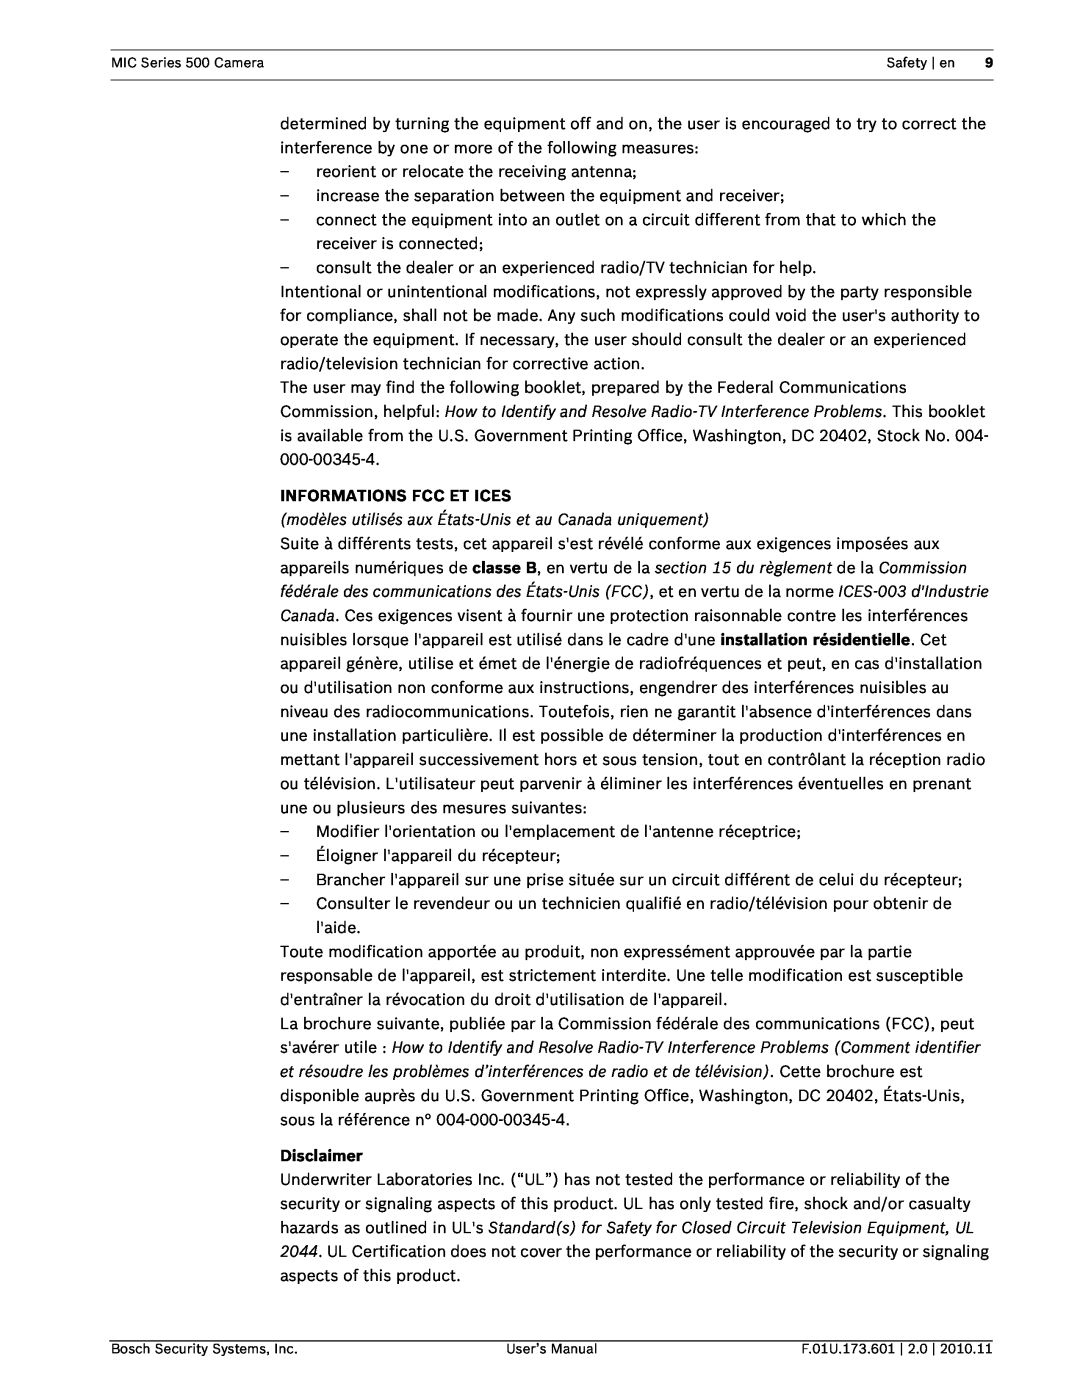 Bosch Appliances 500 user manual Informations Fcc Et Ices, Disclaimer 